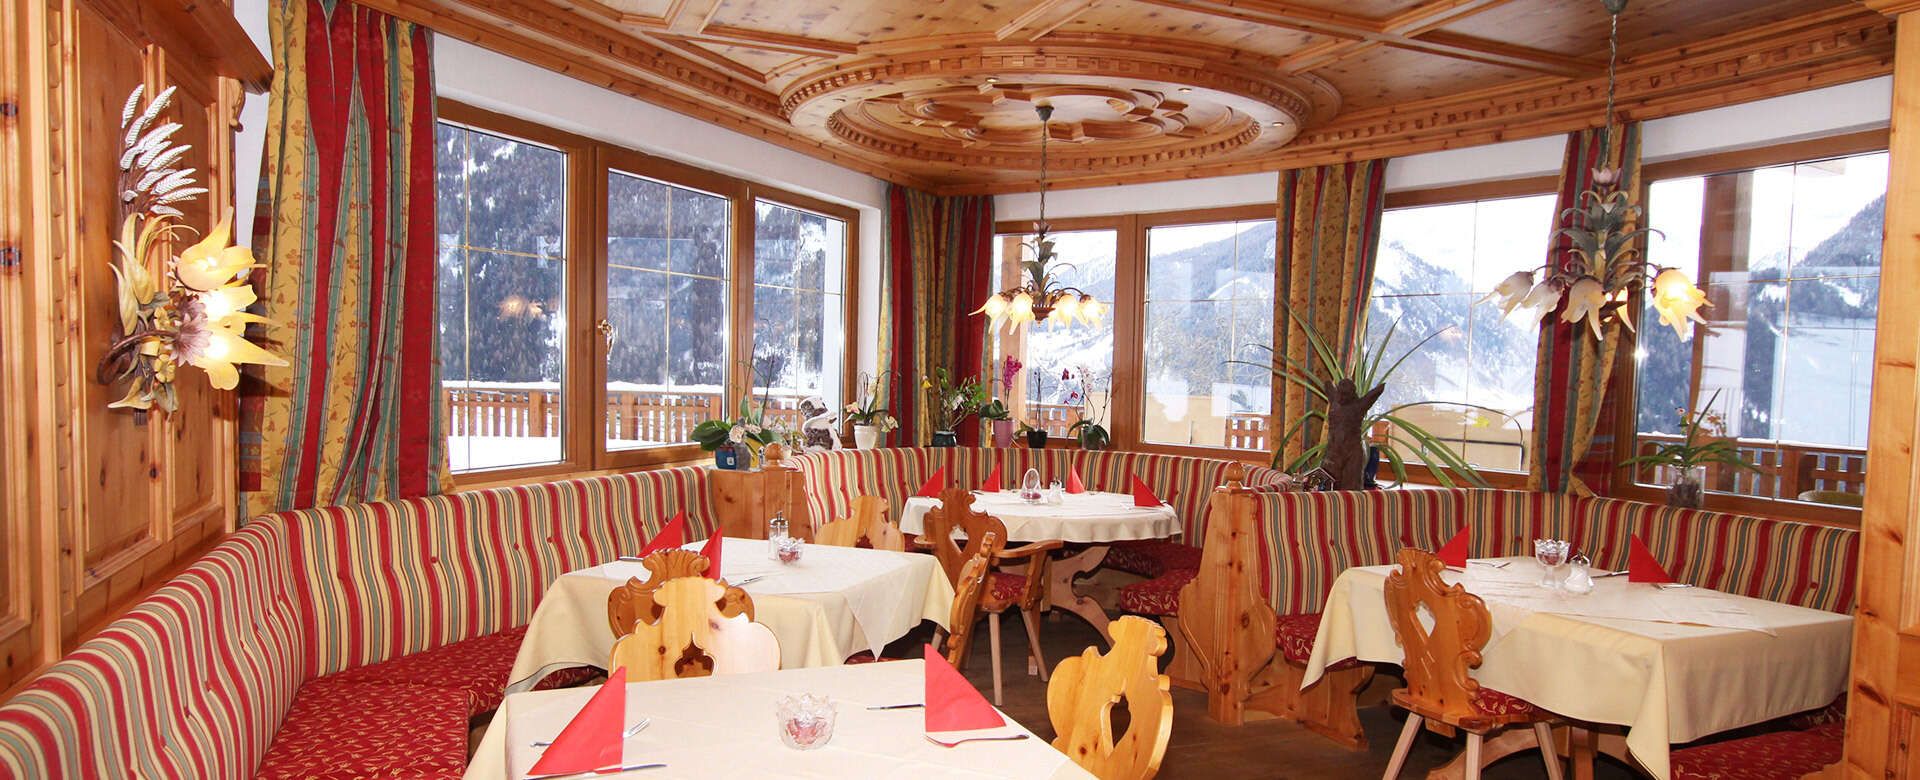 Restaurant Humlerhof in Gries am Brenner, Tyrol